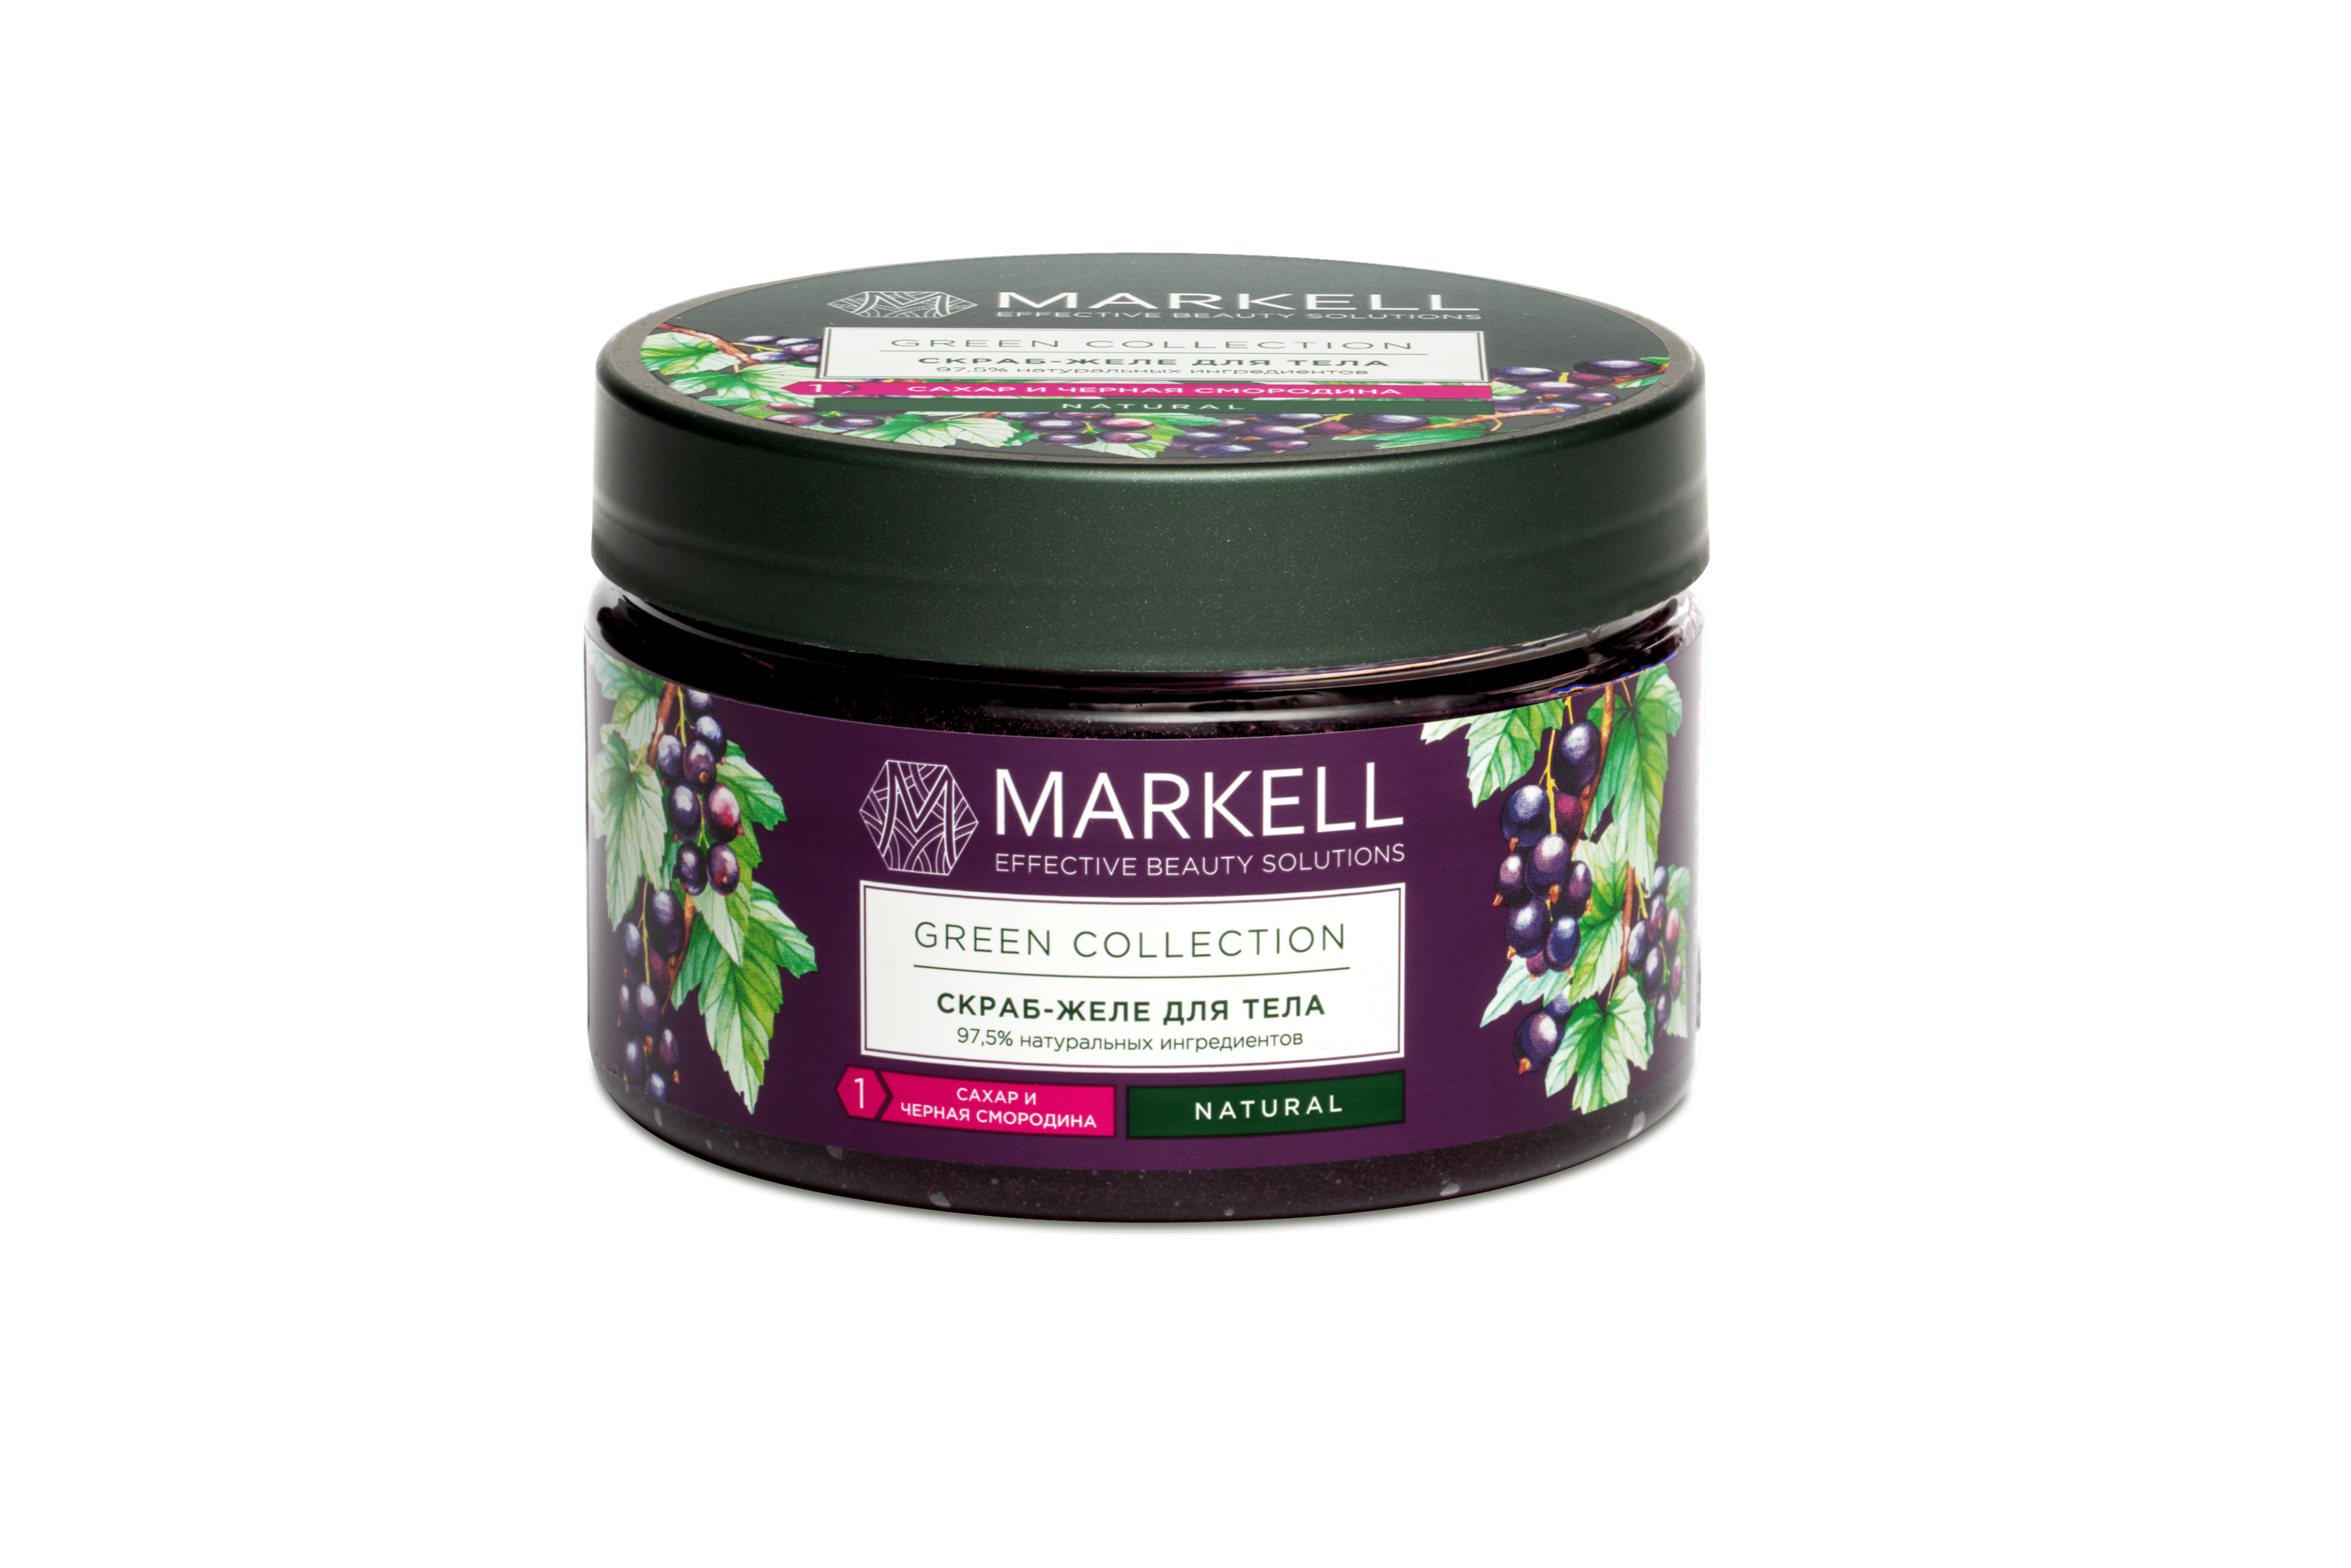 Markell Green Collection Скраб-желе для тела Сахар и черная смородина, 250мл